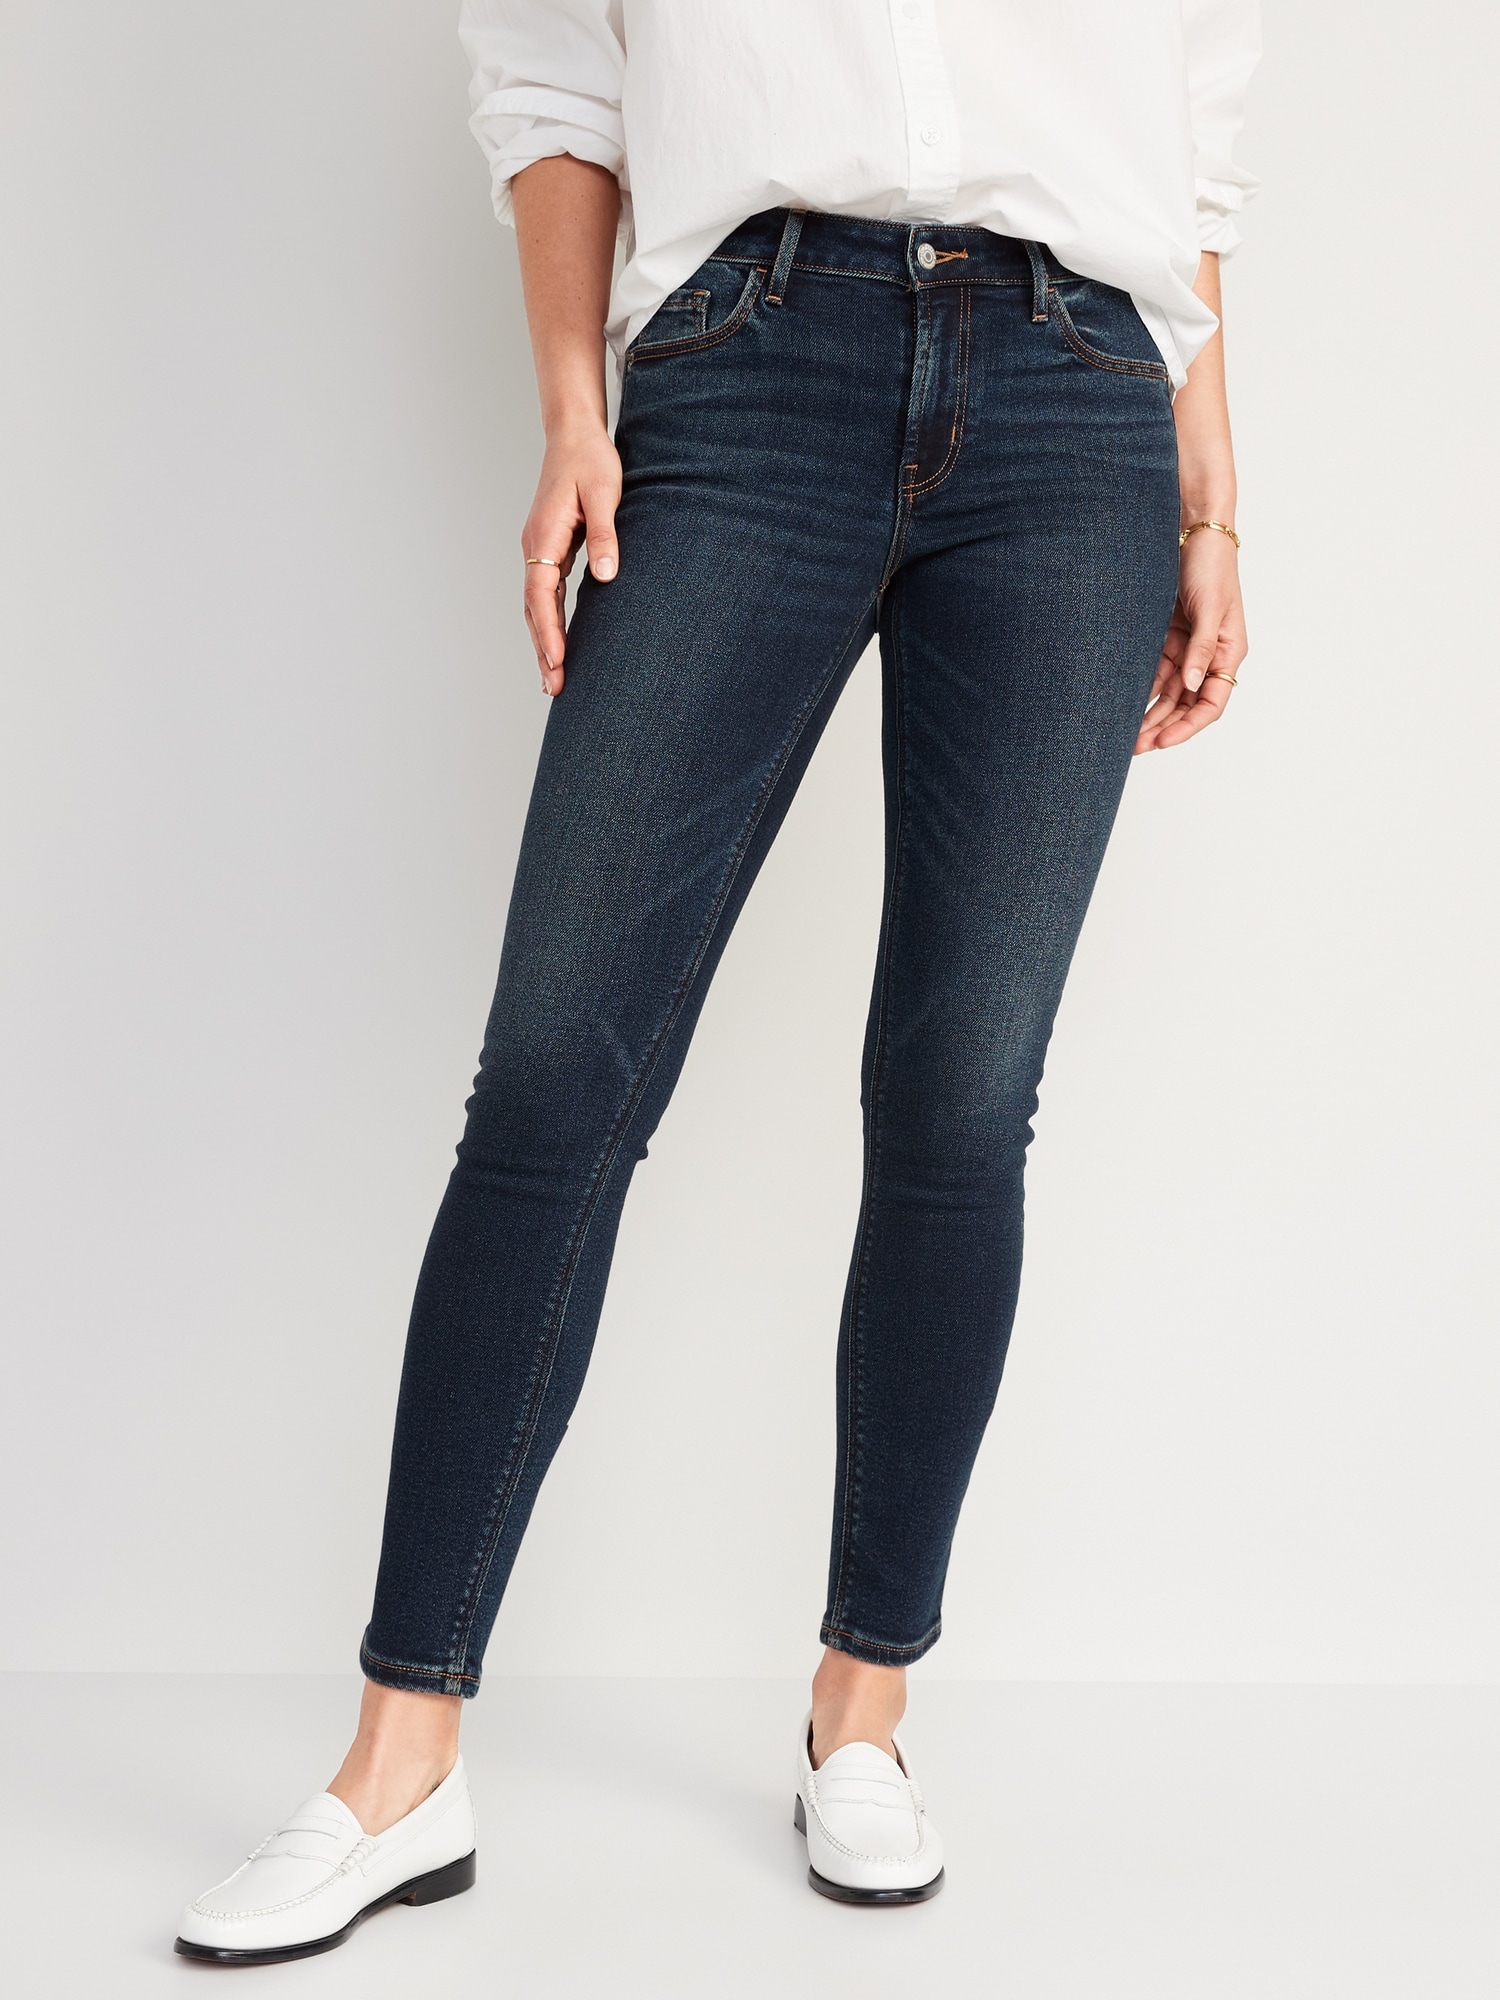 Buy Old Navy women rockstar low rise super skinny jeans black Online